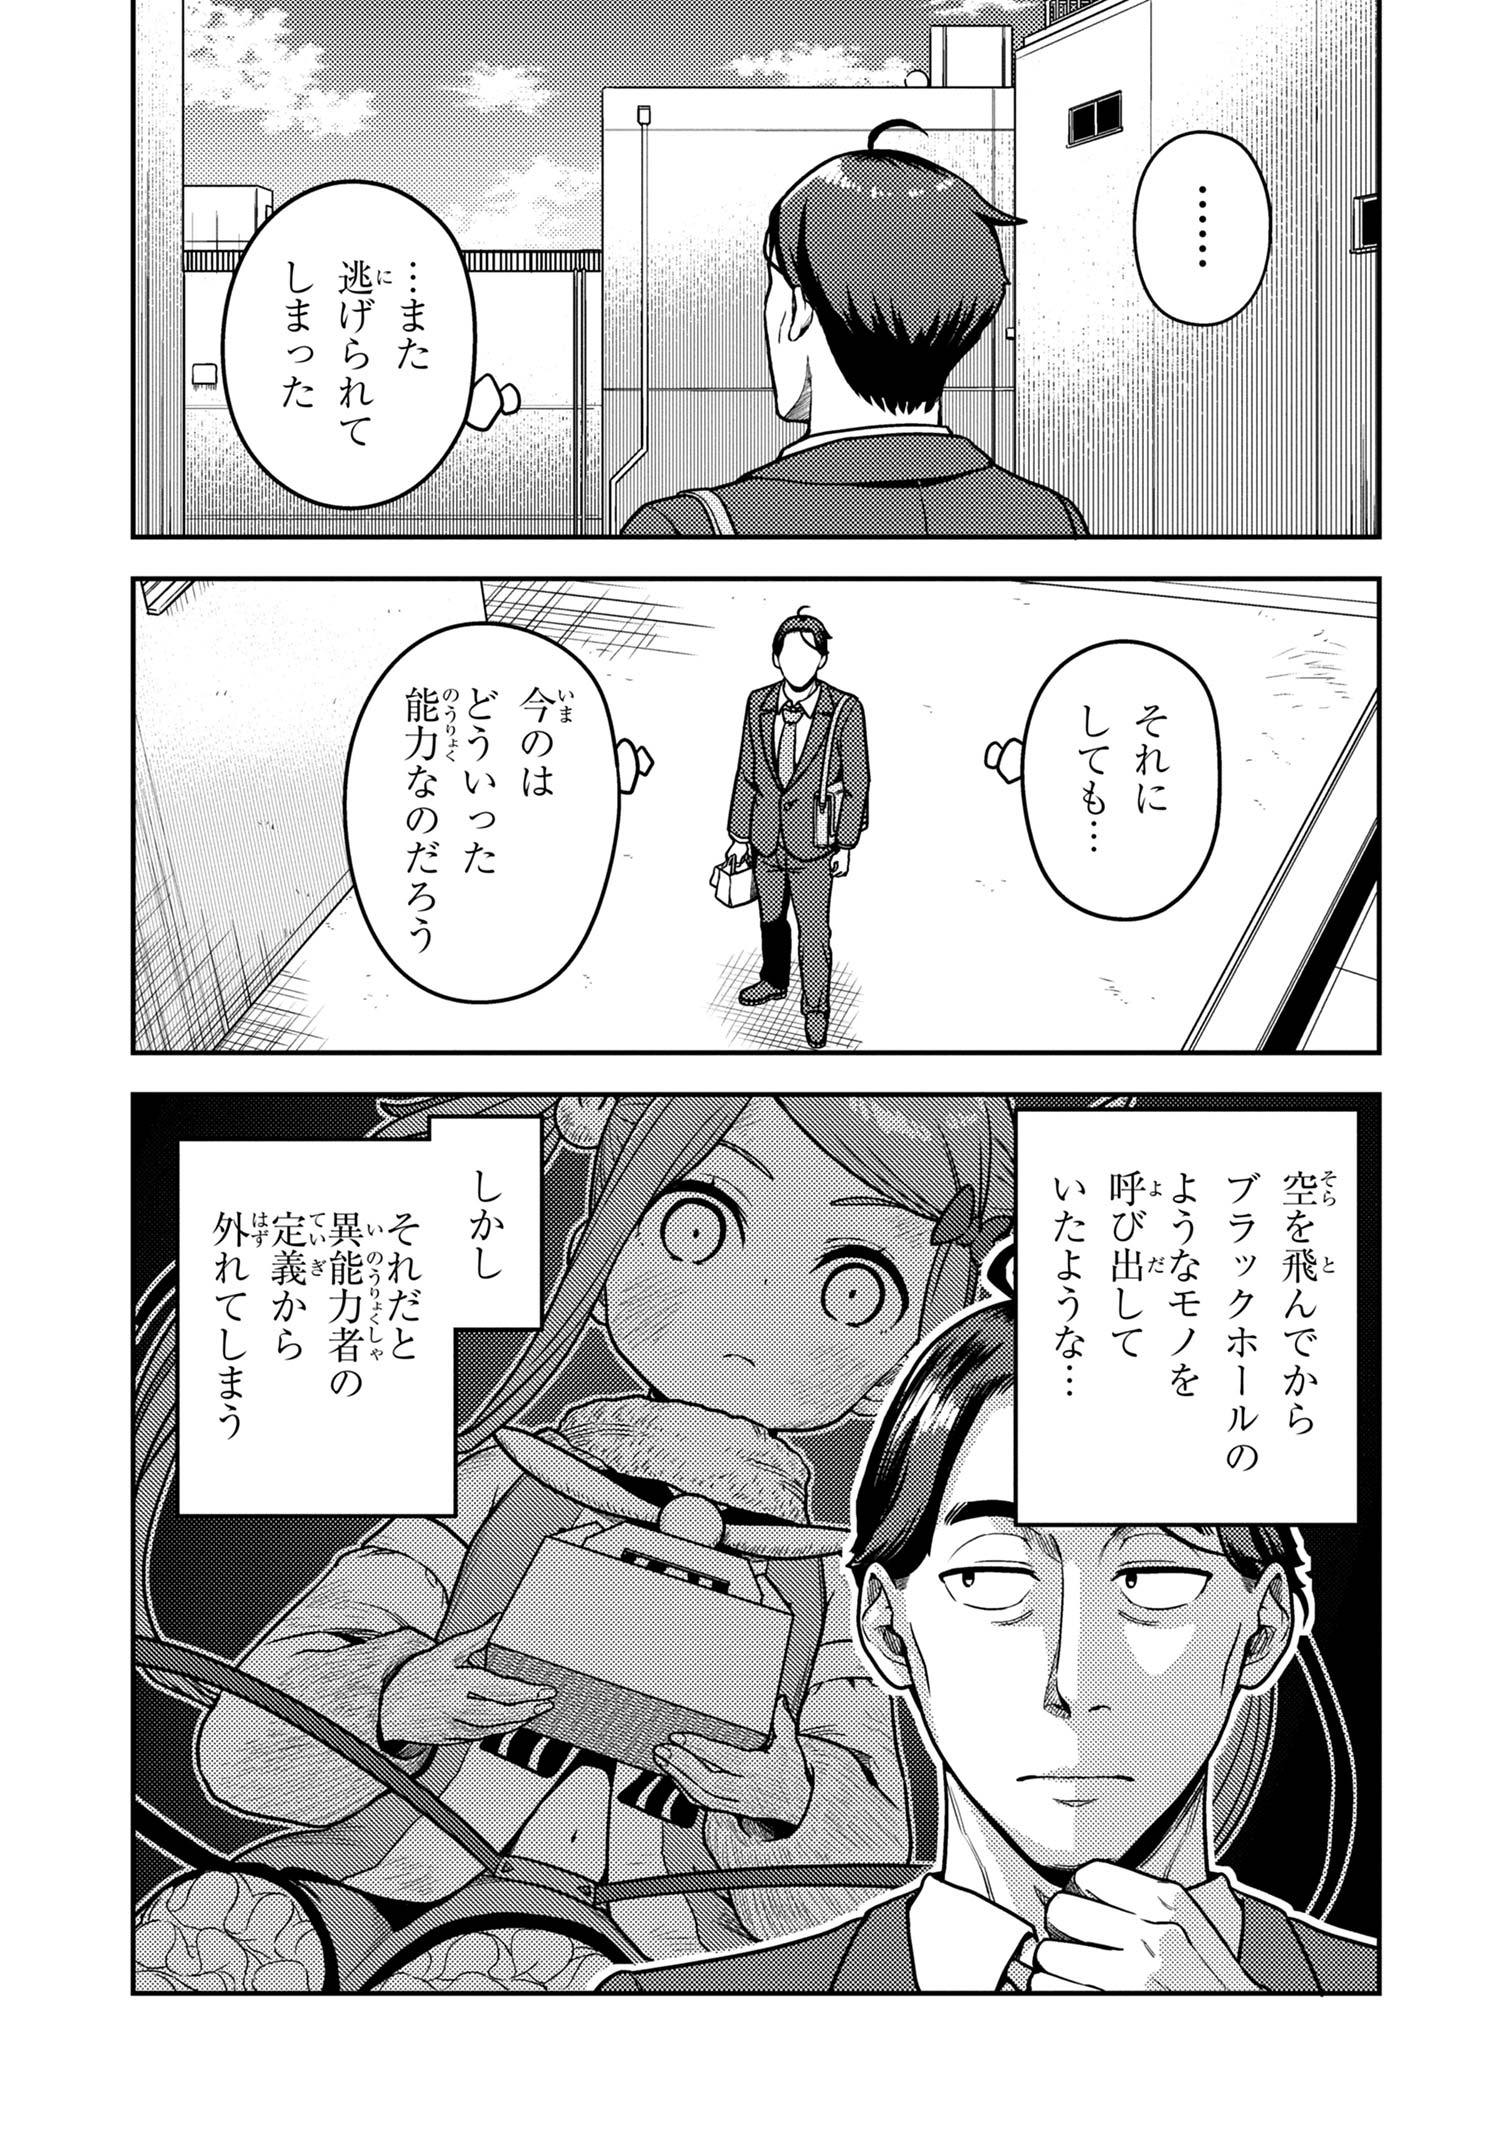 Sasaki to Pii-chan - Chapter 17.2 - Page 7